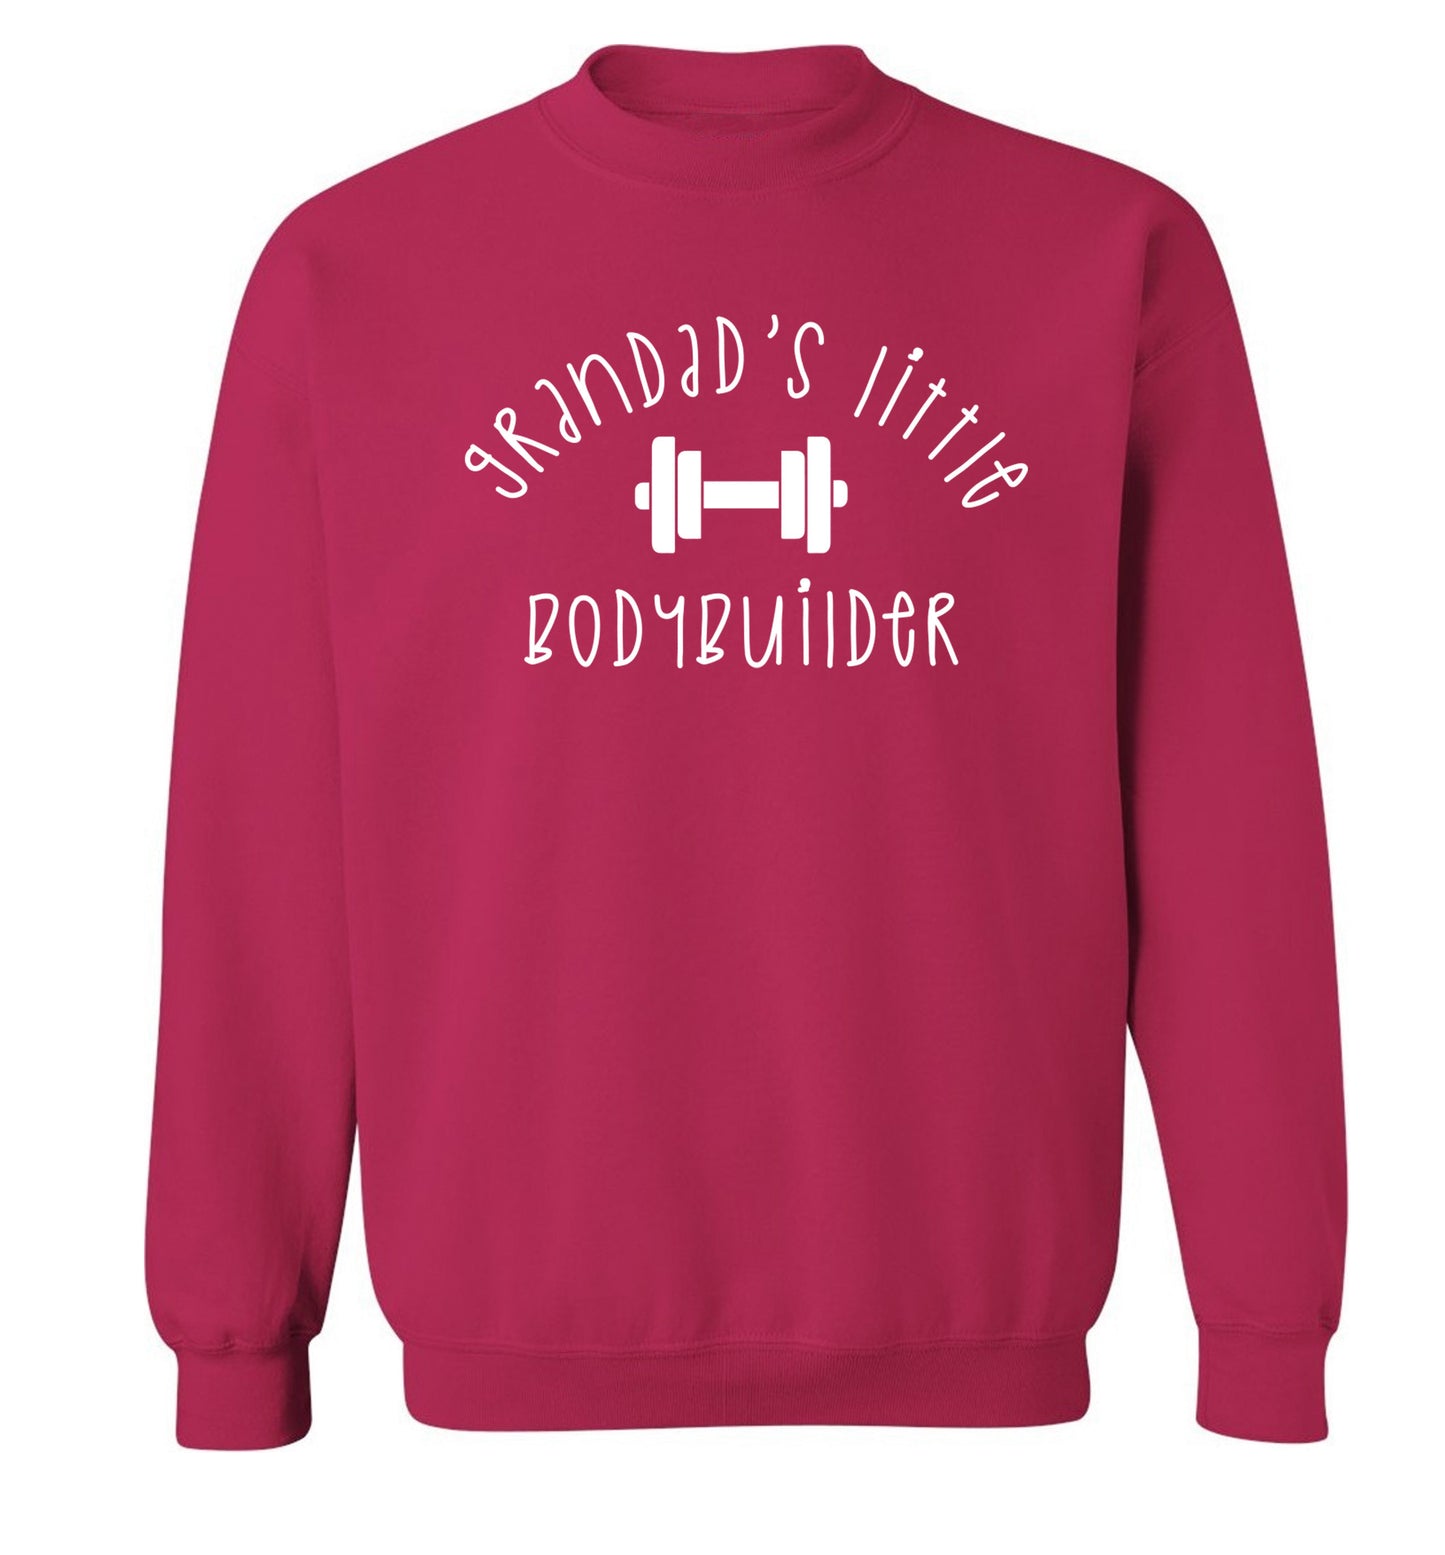 Grandad's little bodybuilder Adult's unisex pink Sweater 2XL